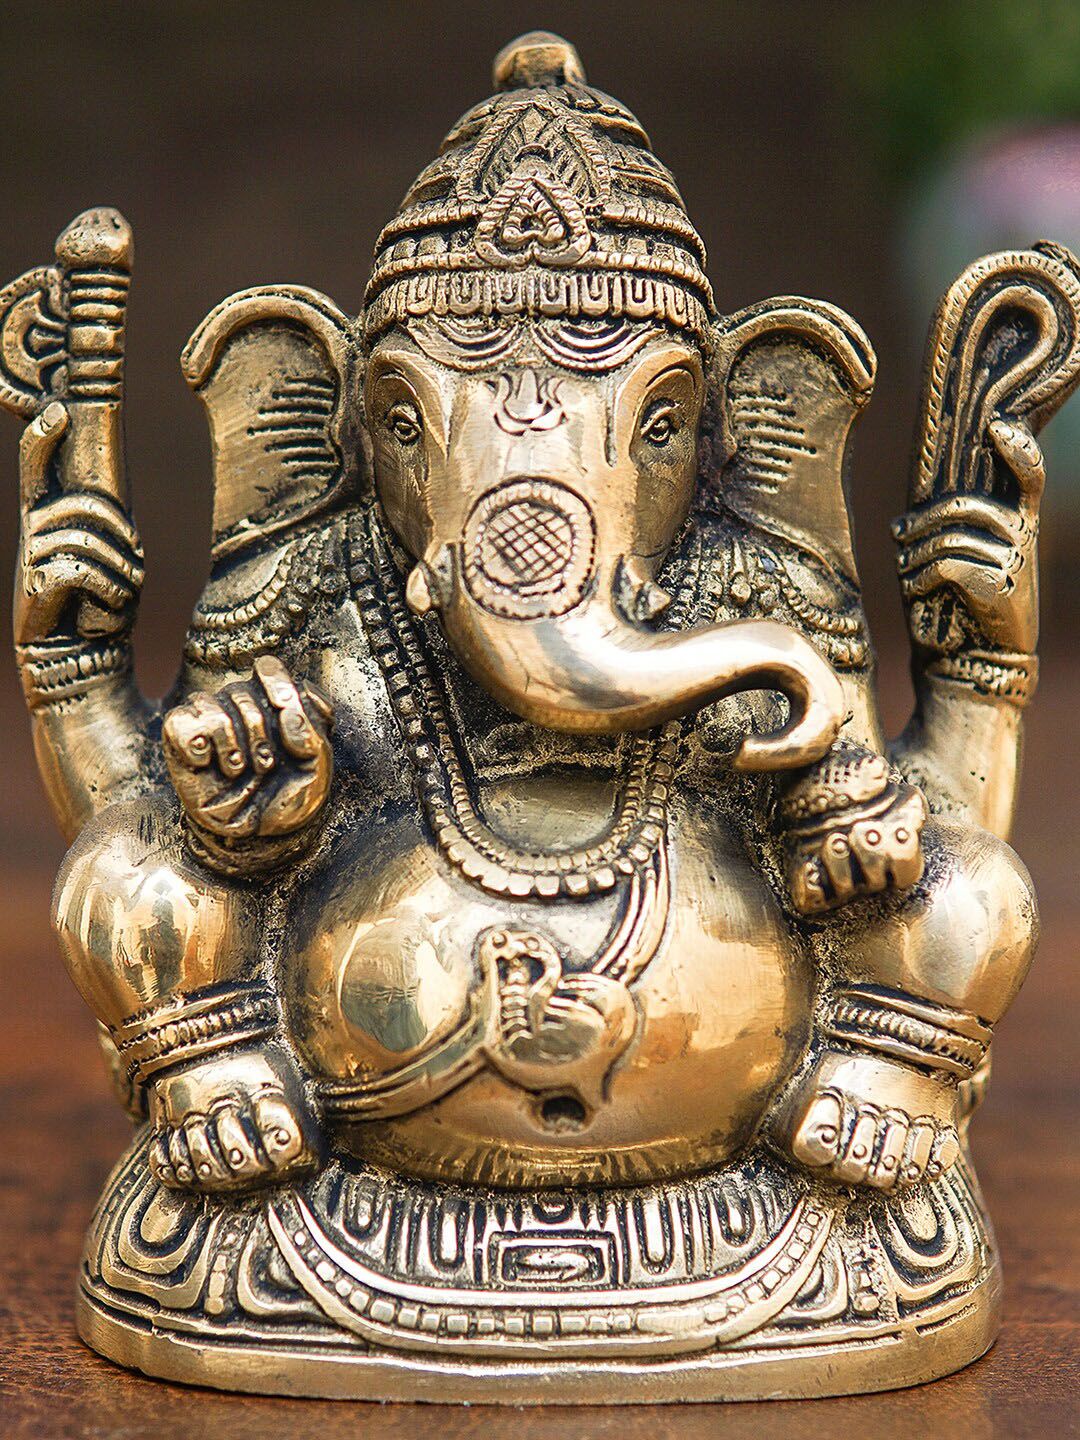 StatueStudio Gold-Toned Ganesha Statue Showpiece Price in India